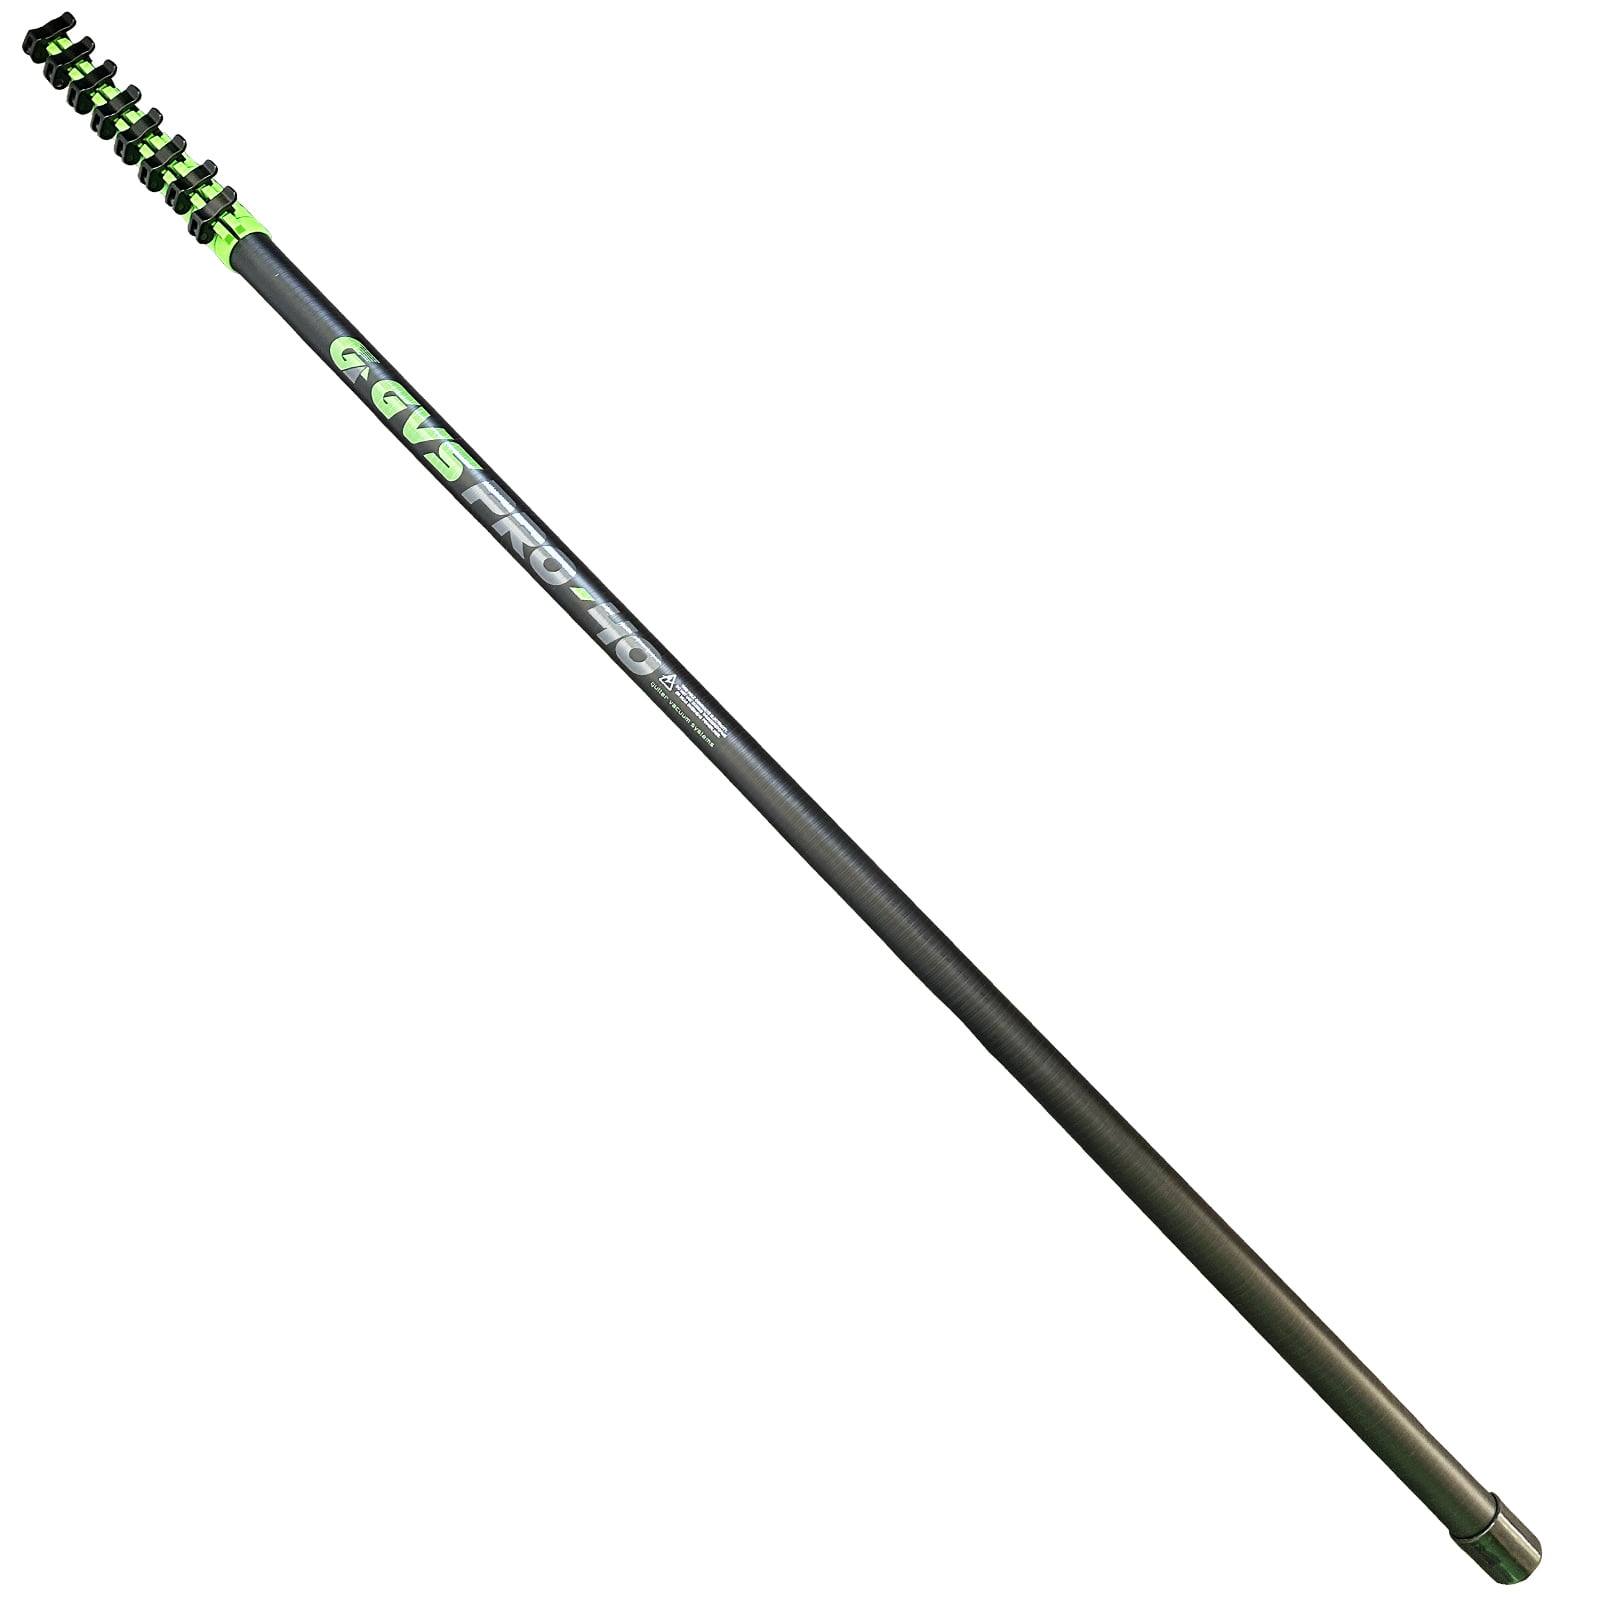 DomeCleanerPRO 40 Foot Carbon Fiber Extension Pole from Dotworkz (DW-EP40)  - Dotworkz